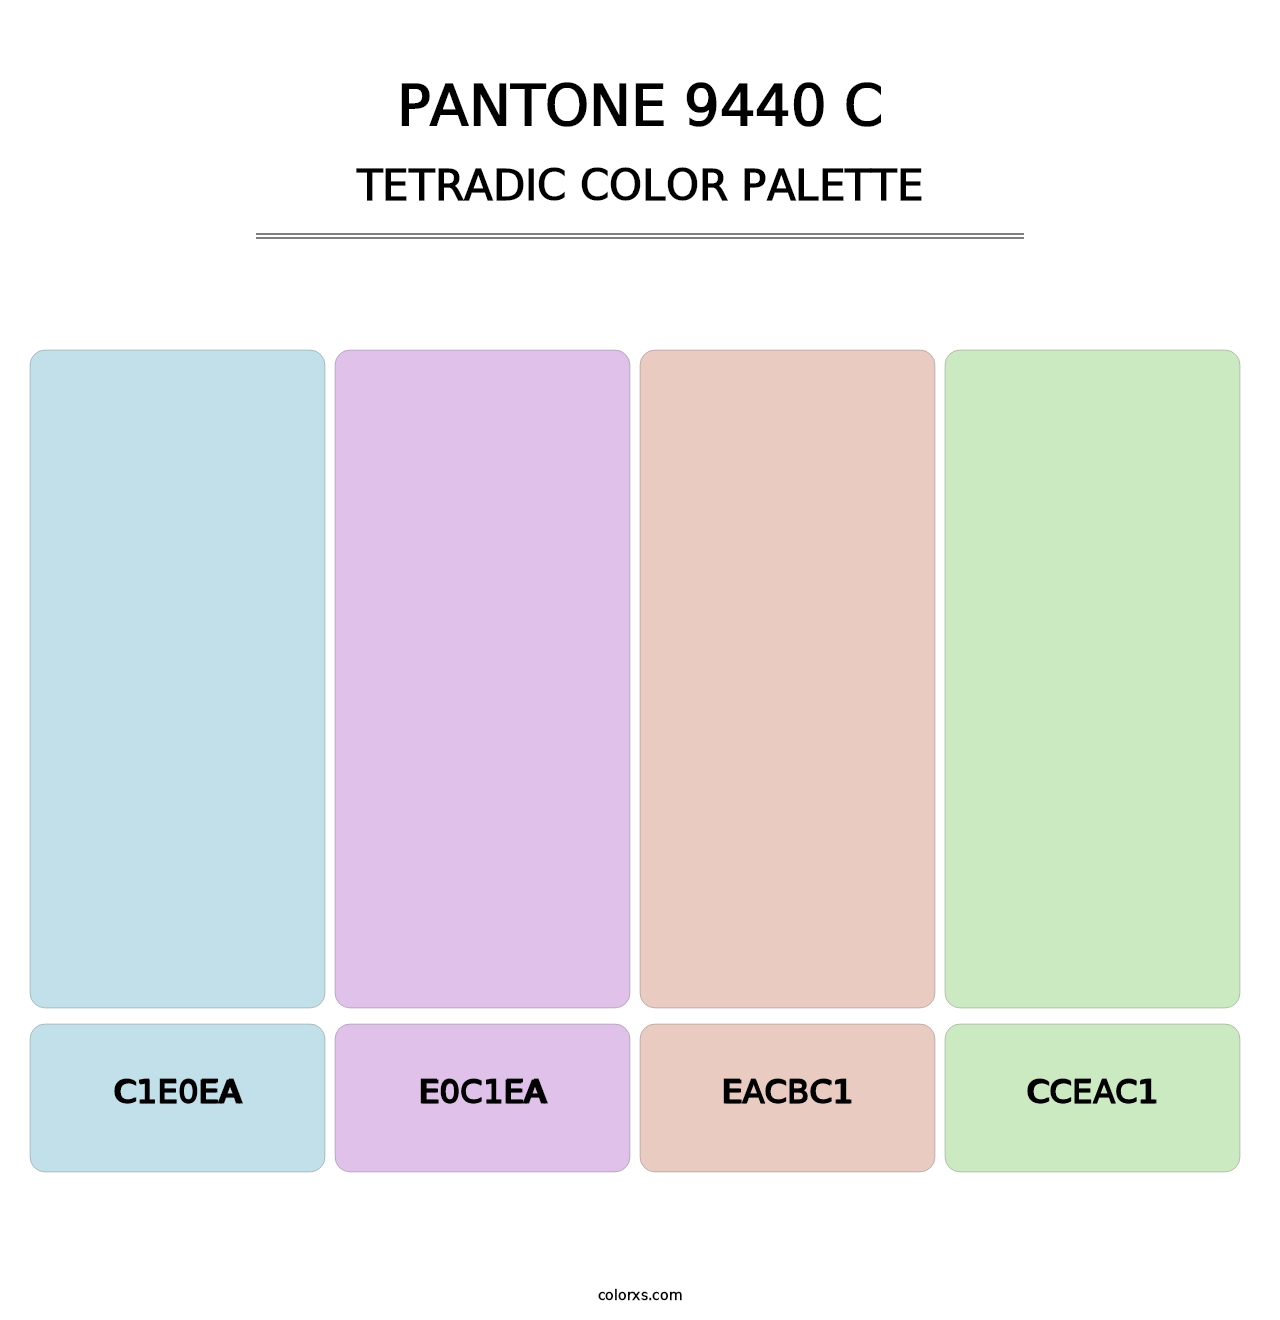 PANTONE 9440 C - Tetradic Color Palette